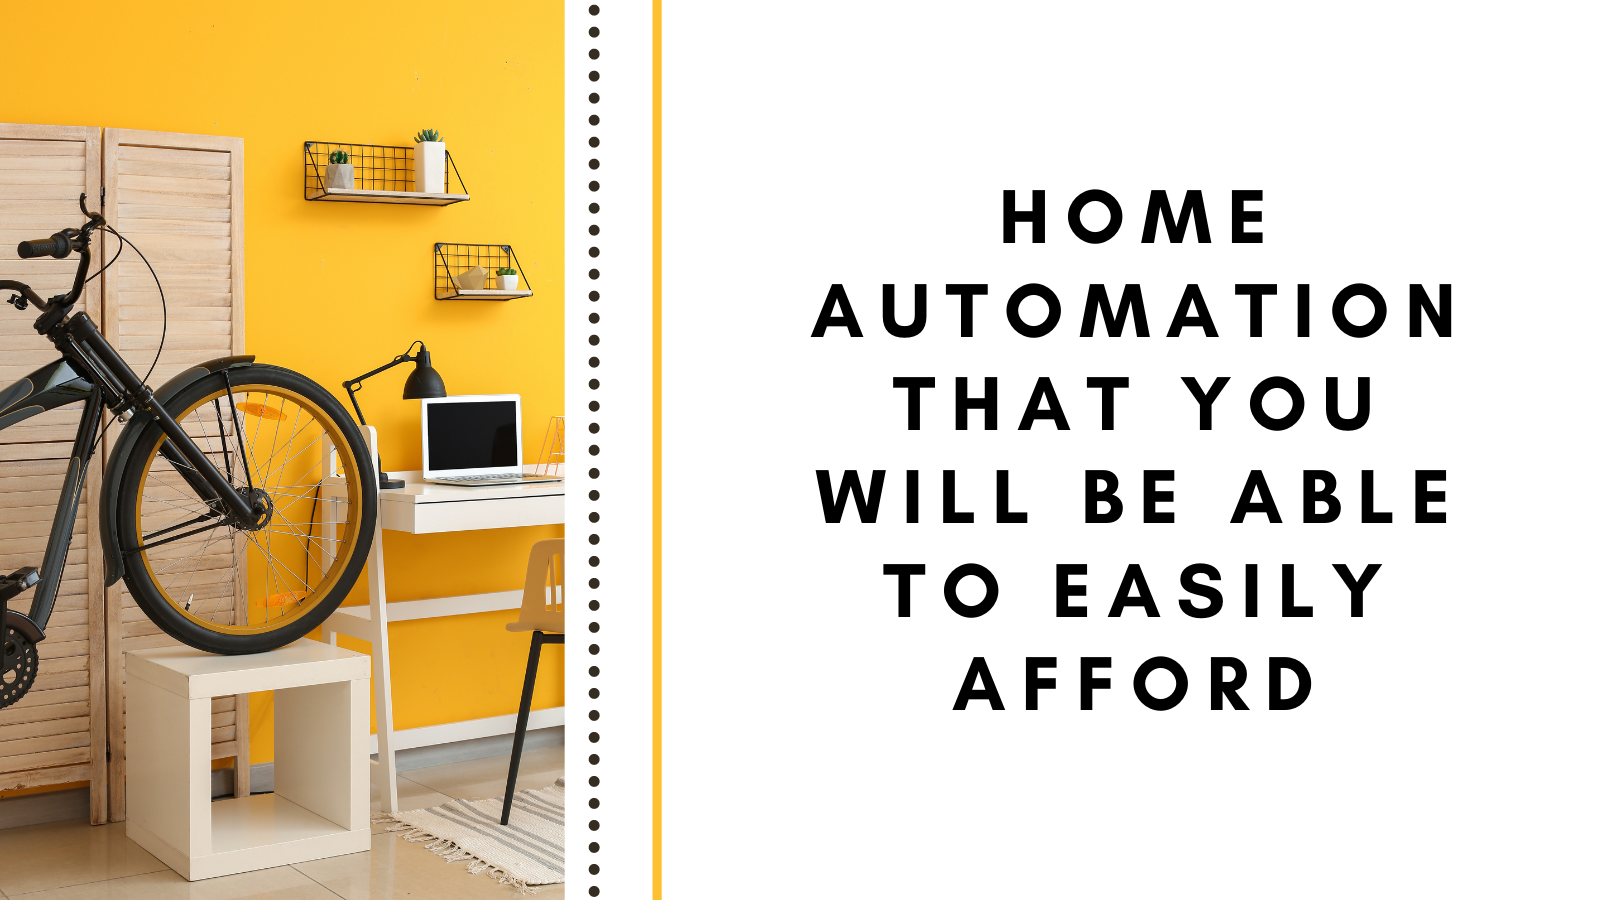 Home automation ideas